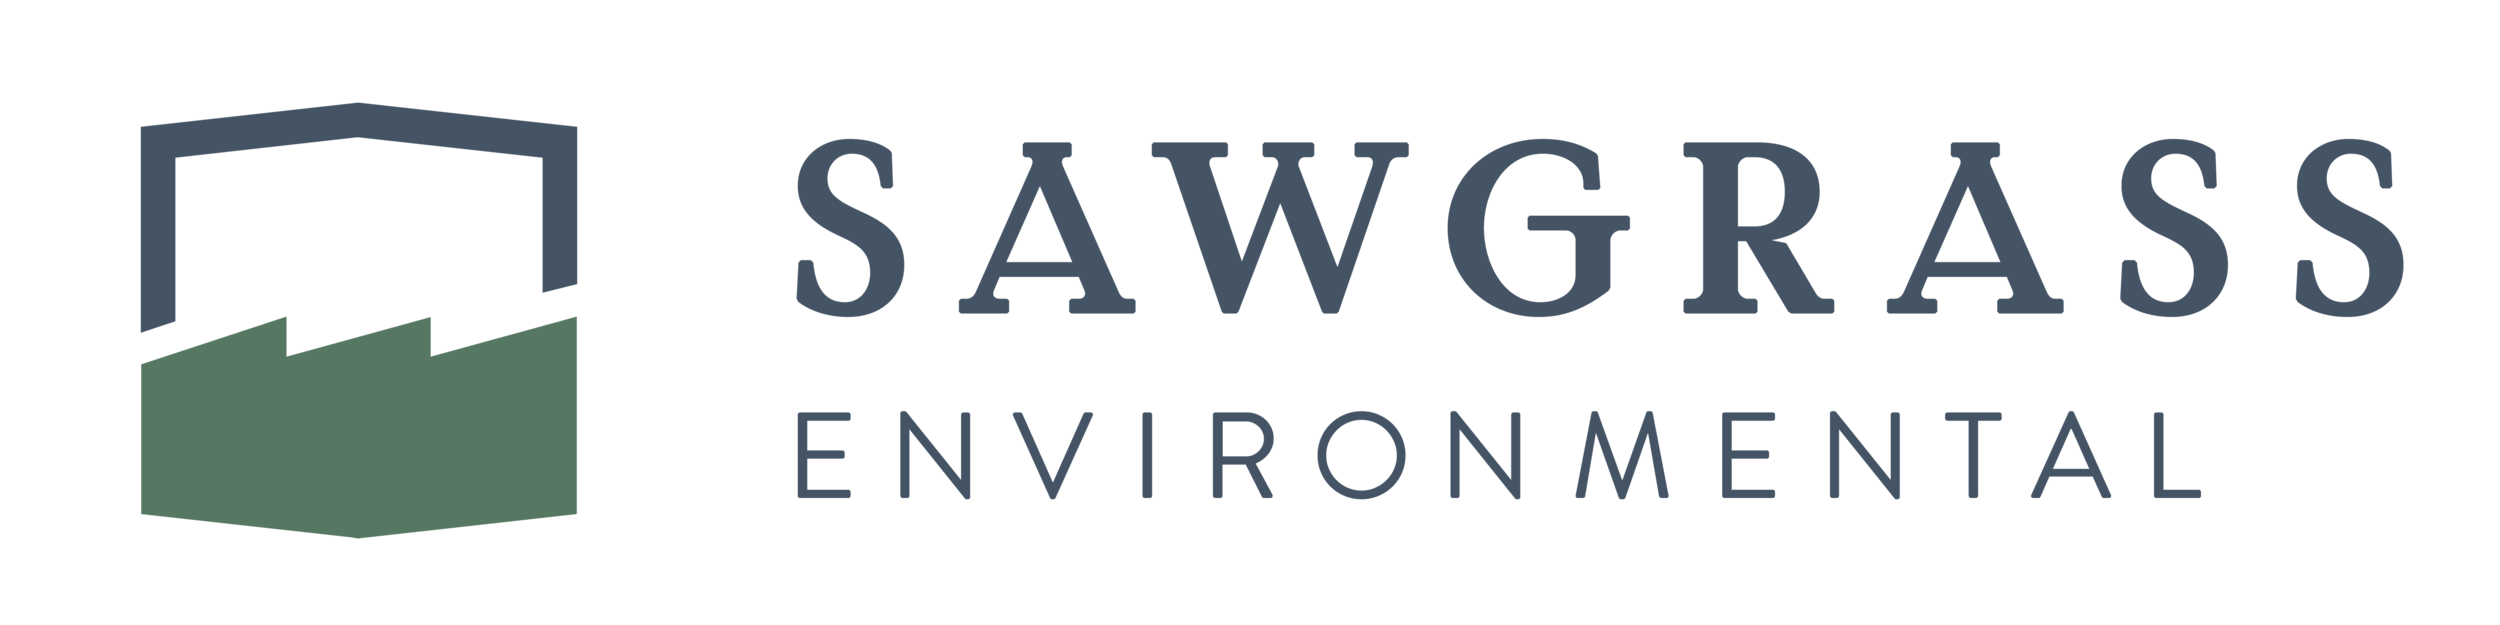 Sawgrass Environmental